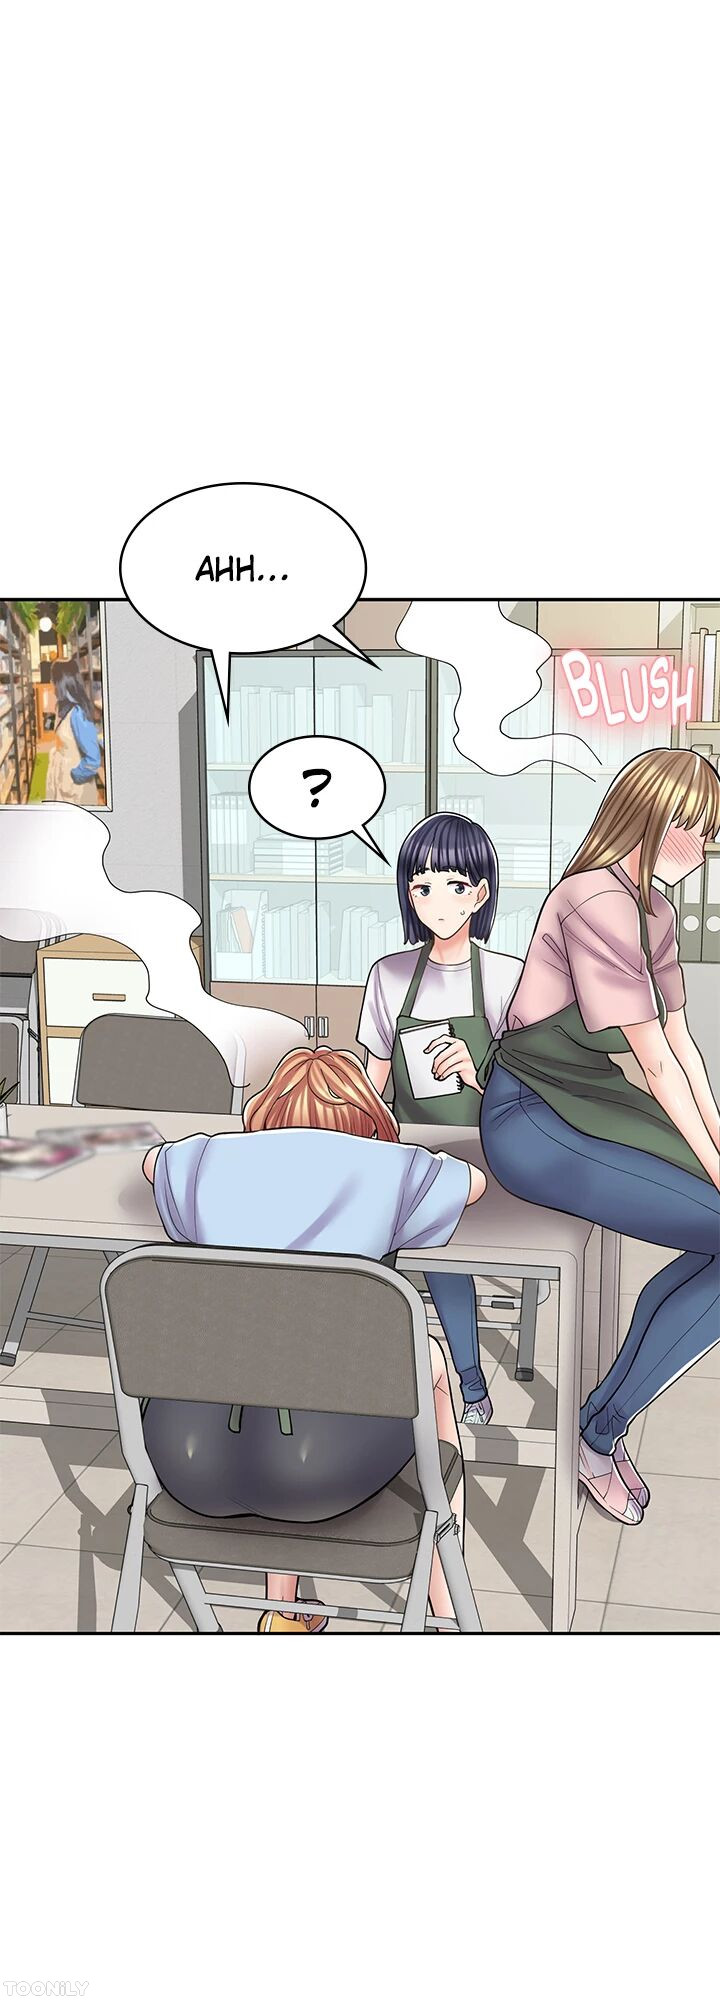 Erotic Manga Café Girls Chapter 36 - HolyManga.net